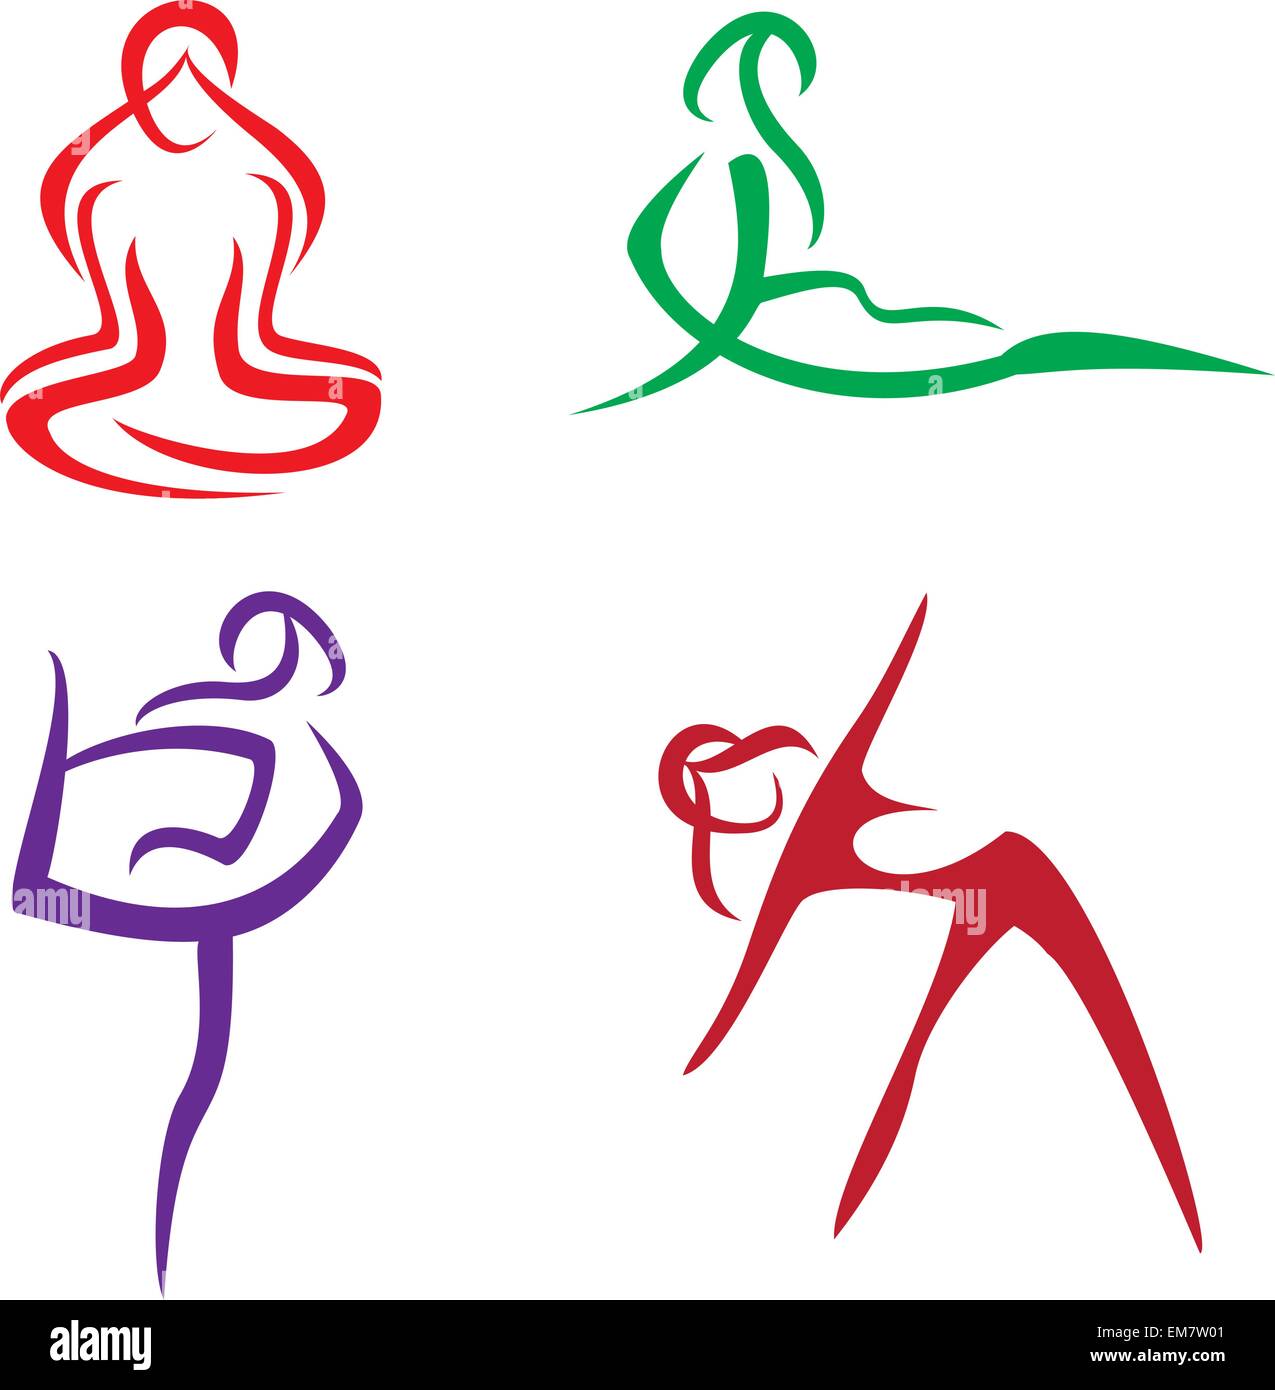 Yoga poses symbols set 1 Stock Vector